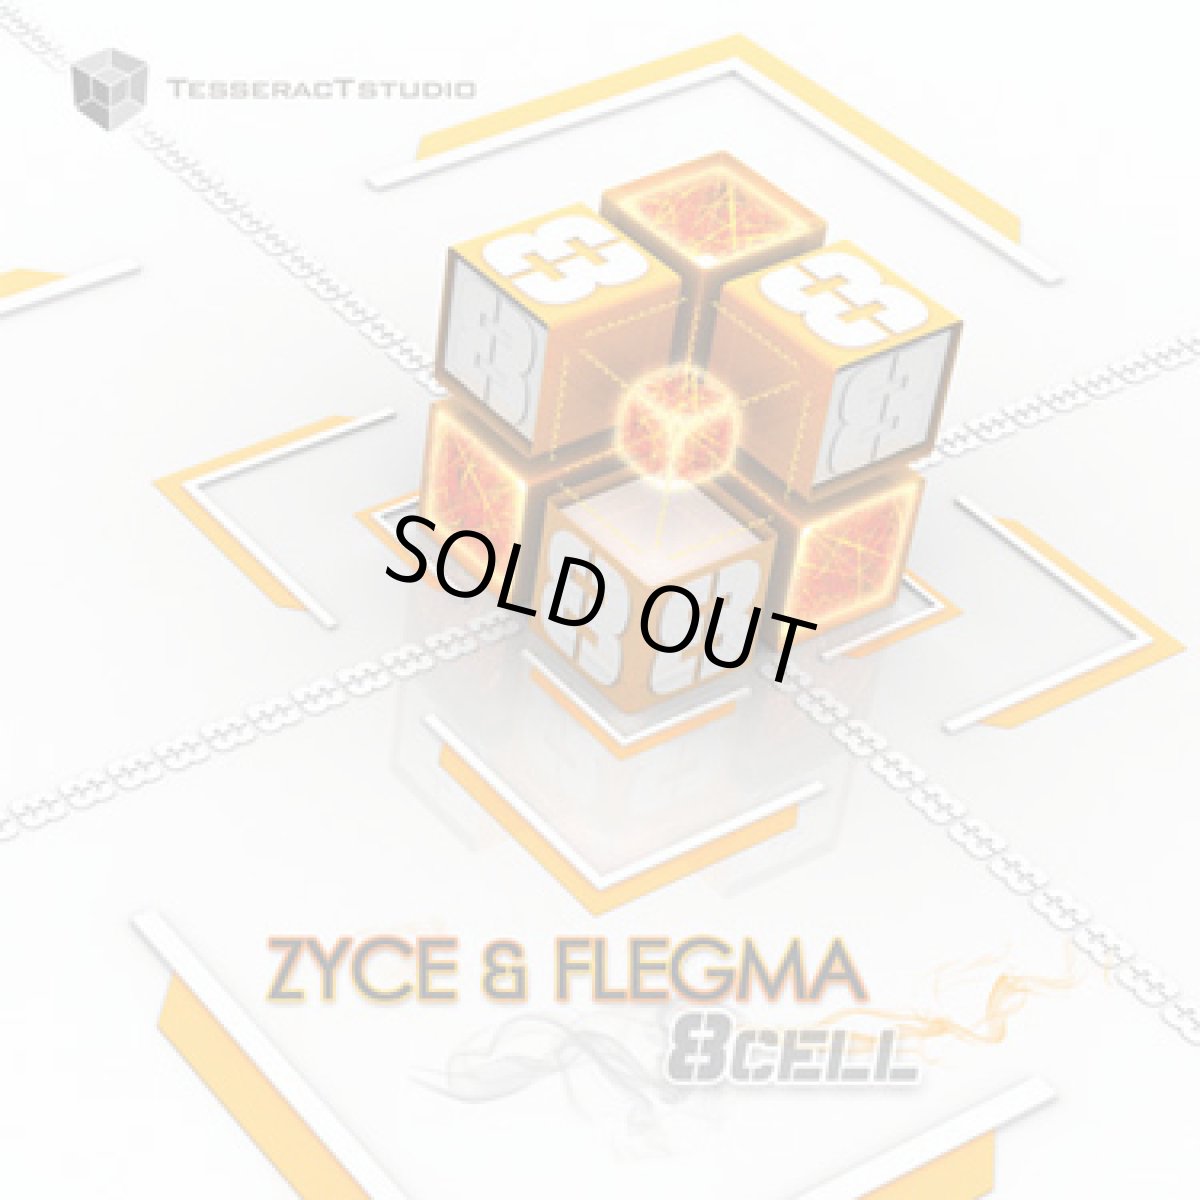 画像1: CD「Zyce & Flegma / 8 Cell」 (1)